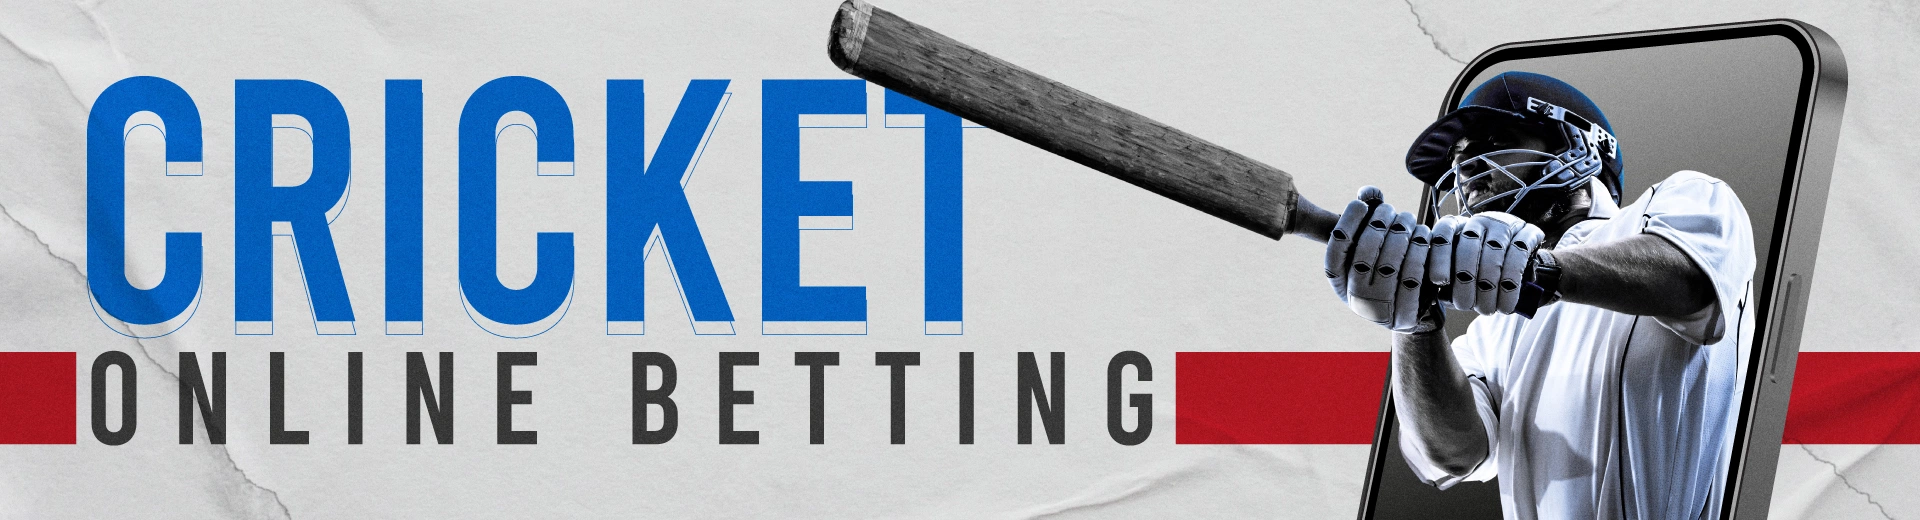 Cricket Online Betting in the Philippines - OKBet